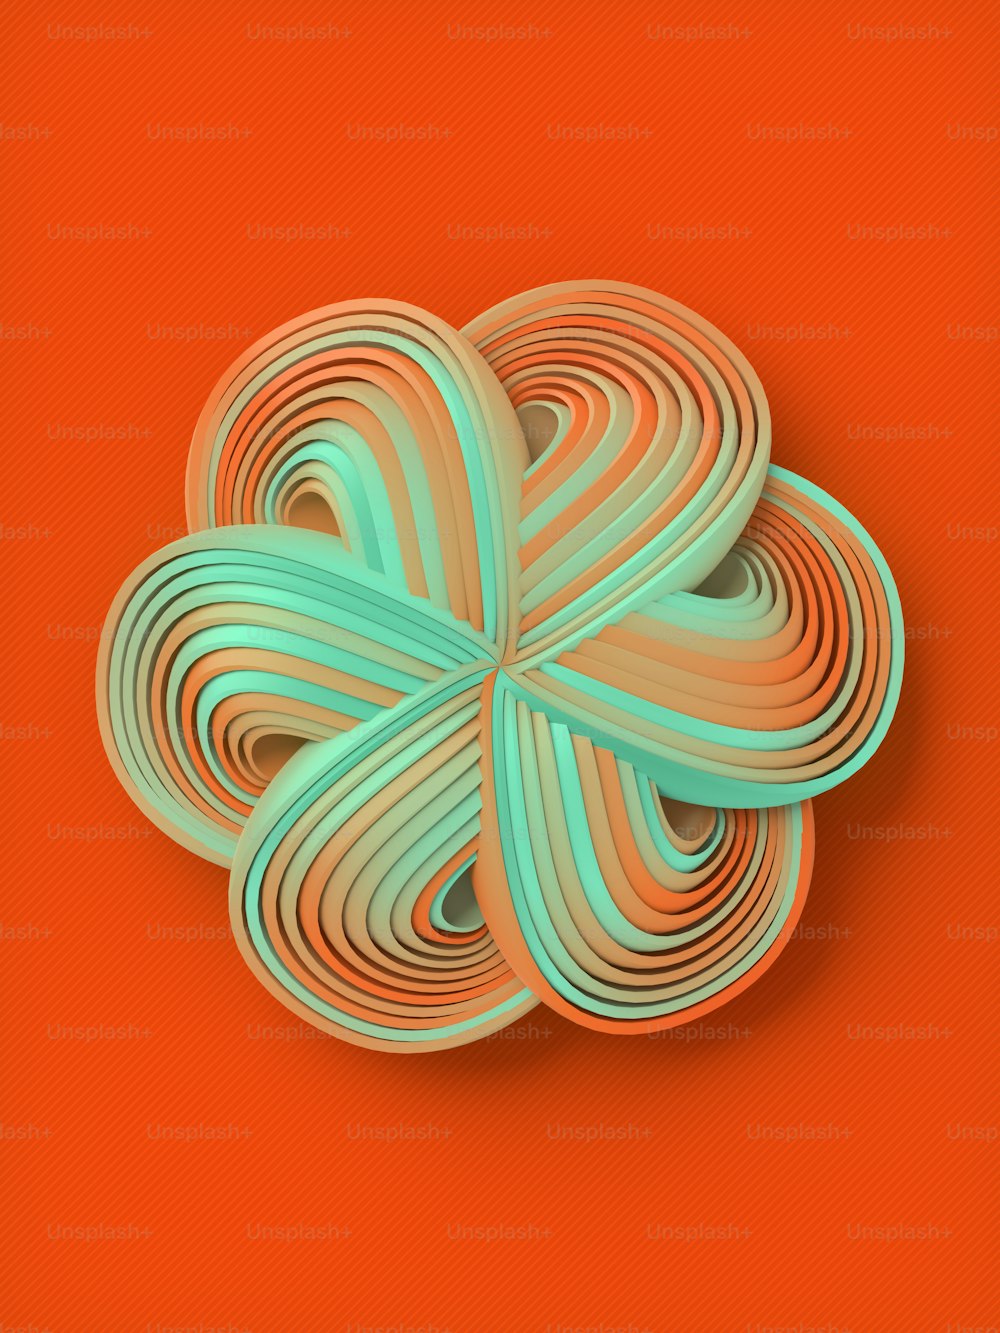 3d rendering geometric stylized flower for concept design on orange background. Trendy design element. Modern minimal abstract digital illustration